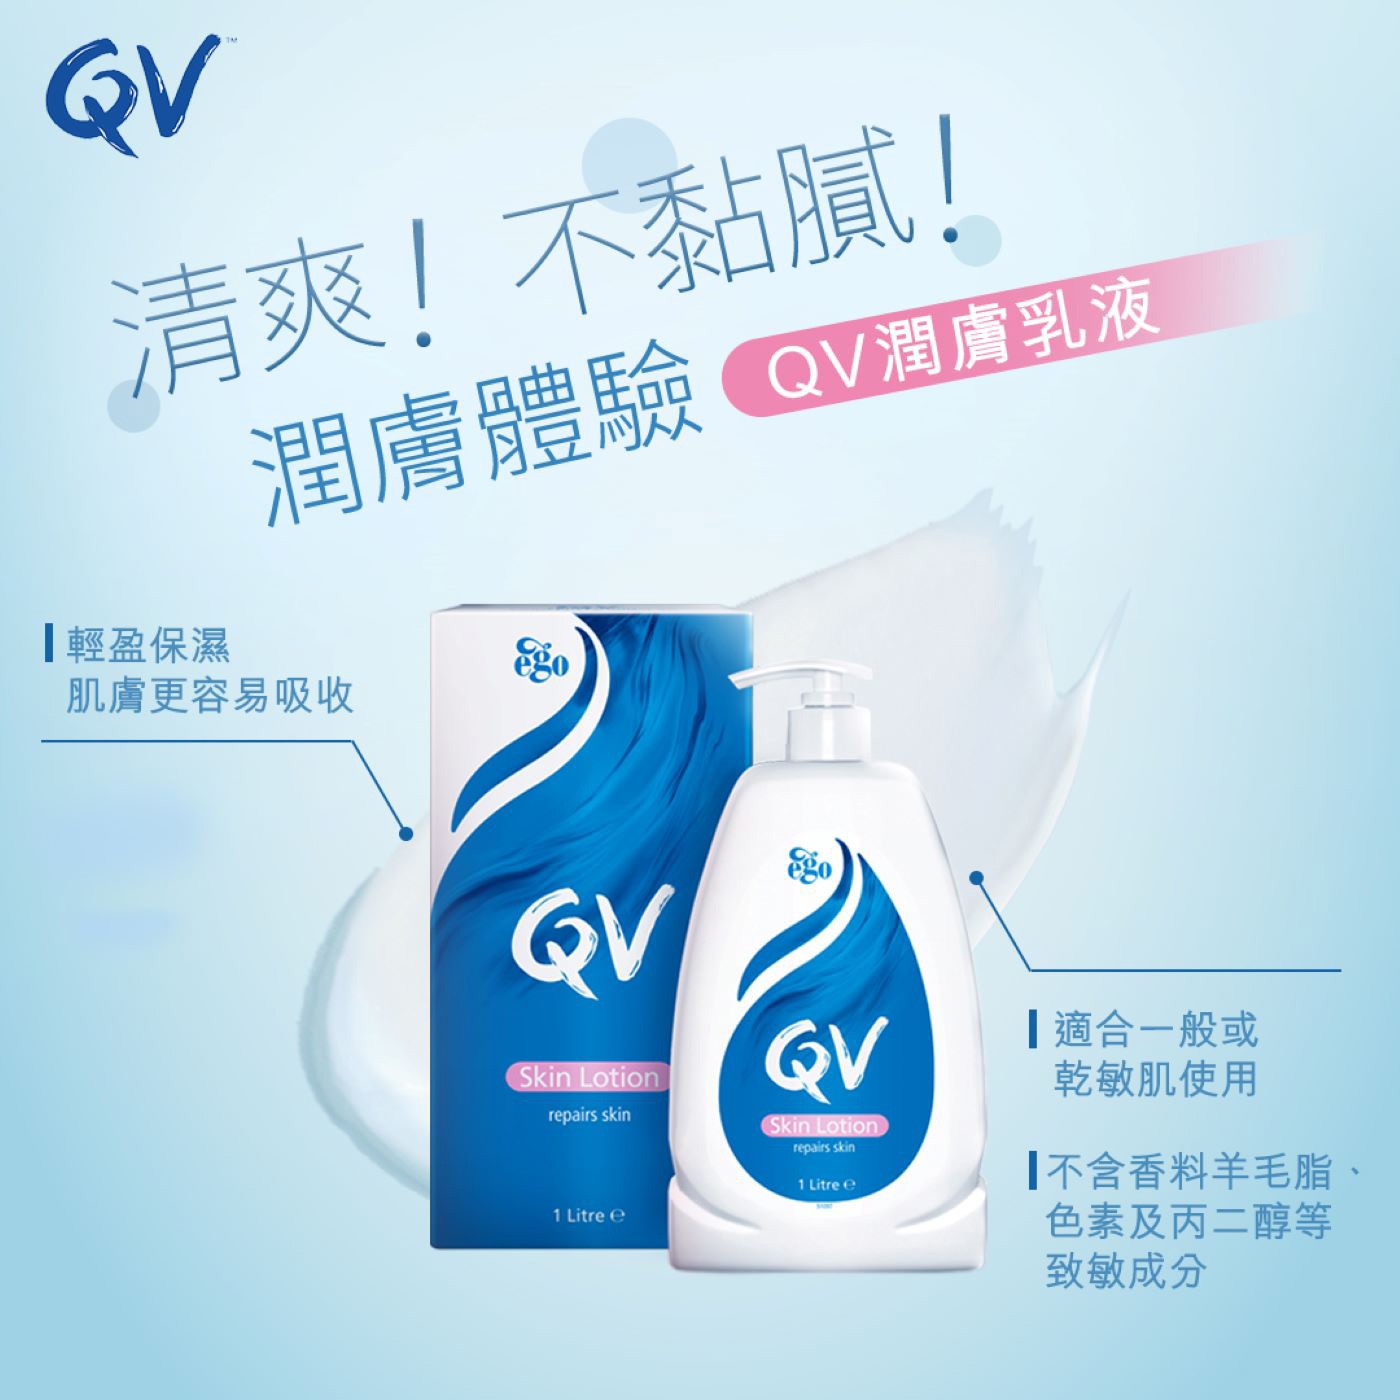 QV 舒敏保濕乳液，適用一般肌、敏感肌，保濕、無香精，溫和滋潤肌膚。